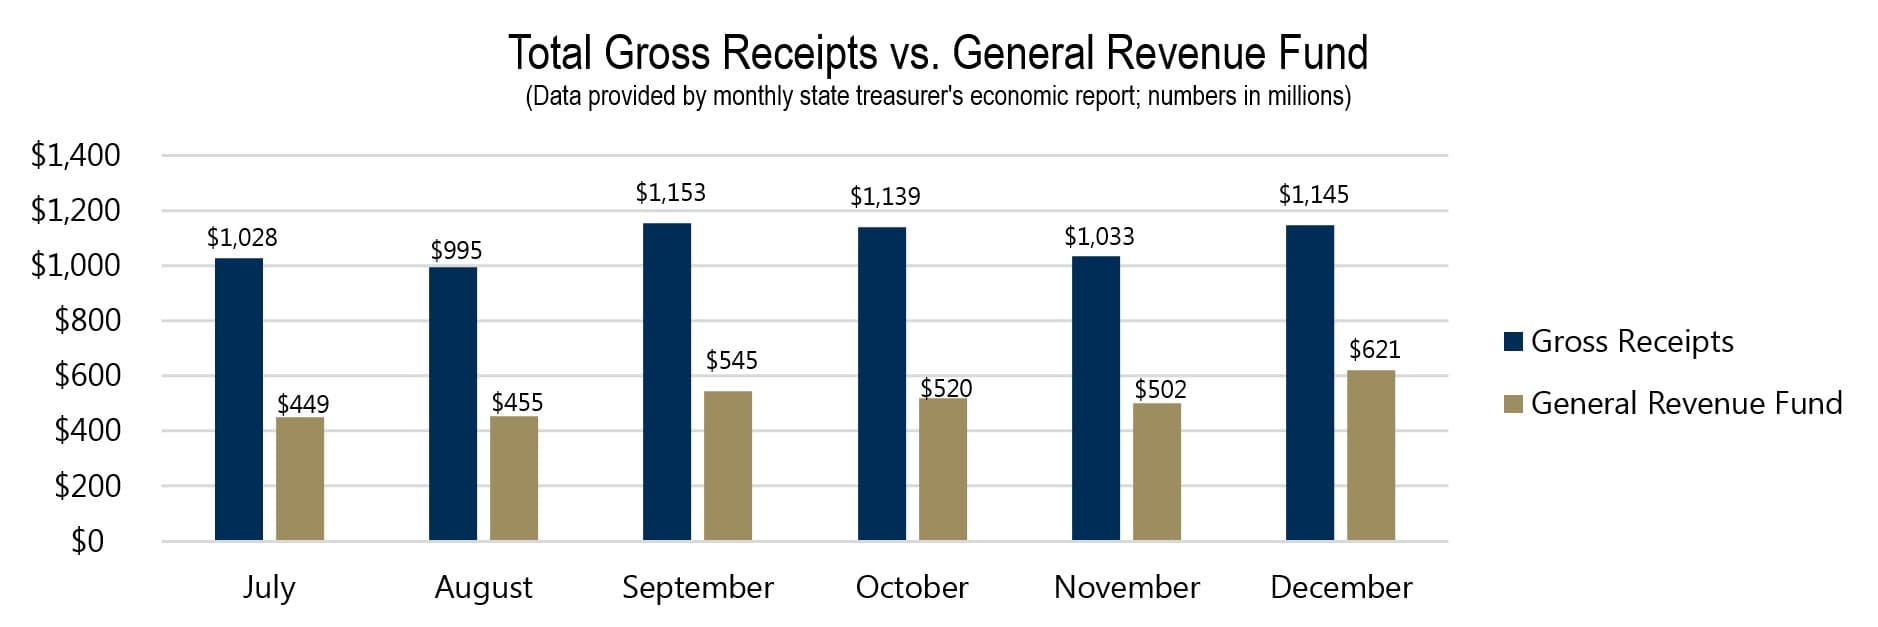 Total Gross Receipts vs. General Revenue Fund